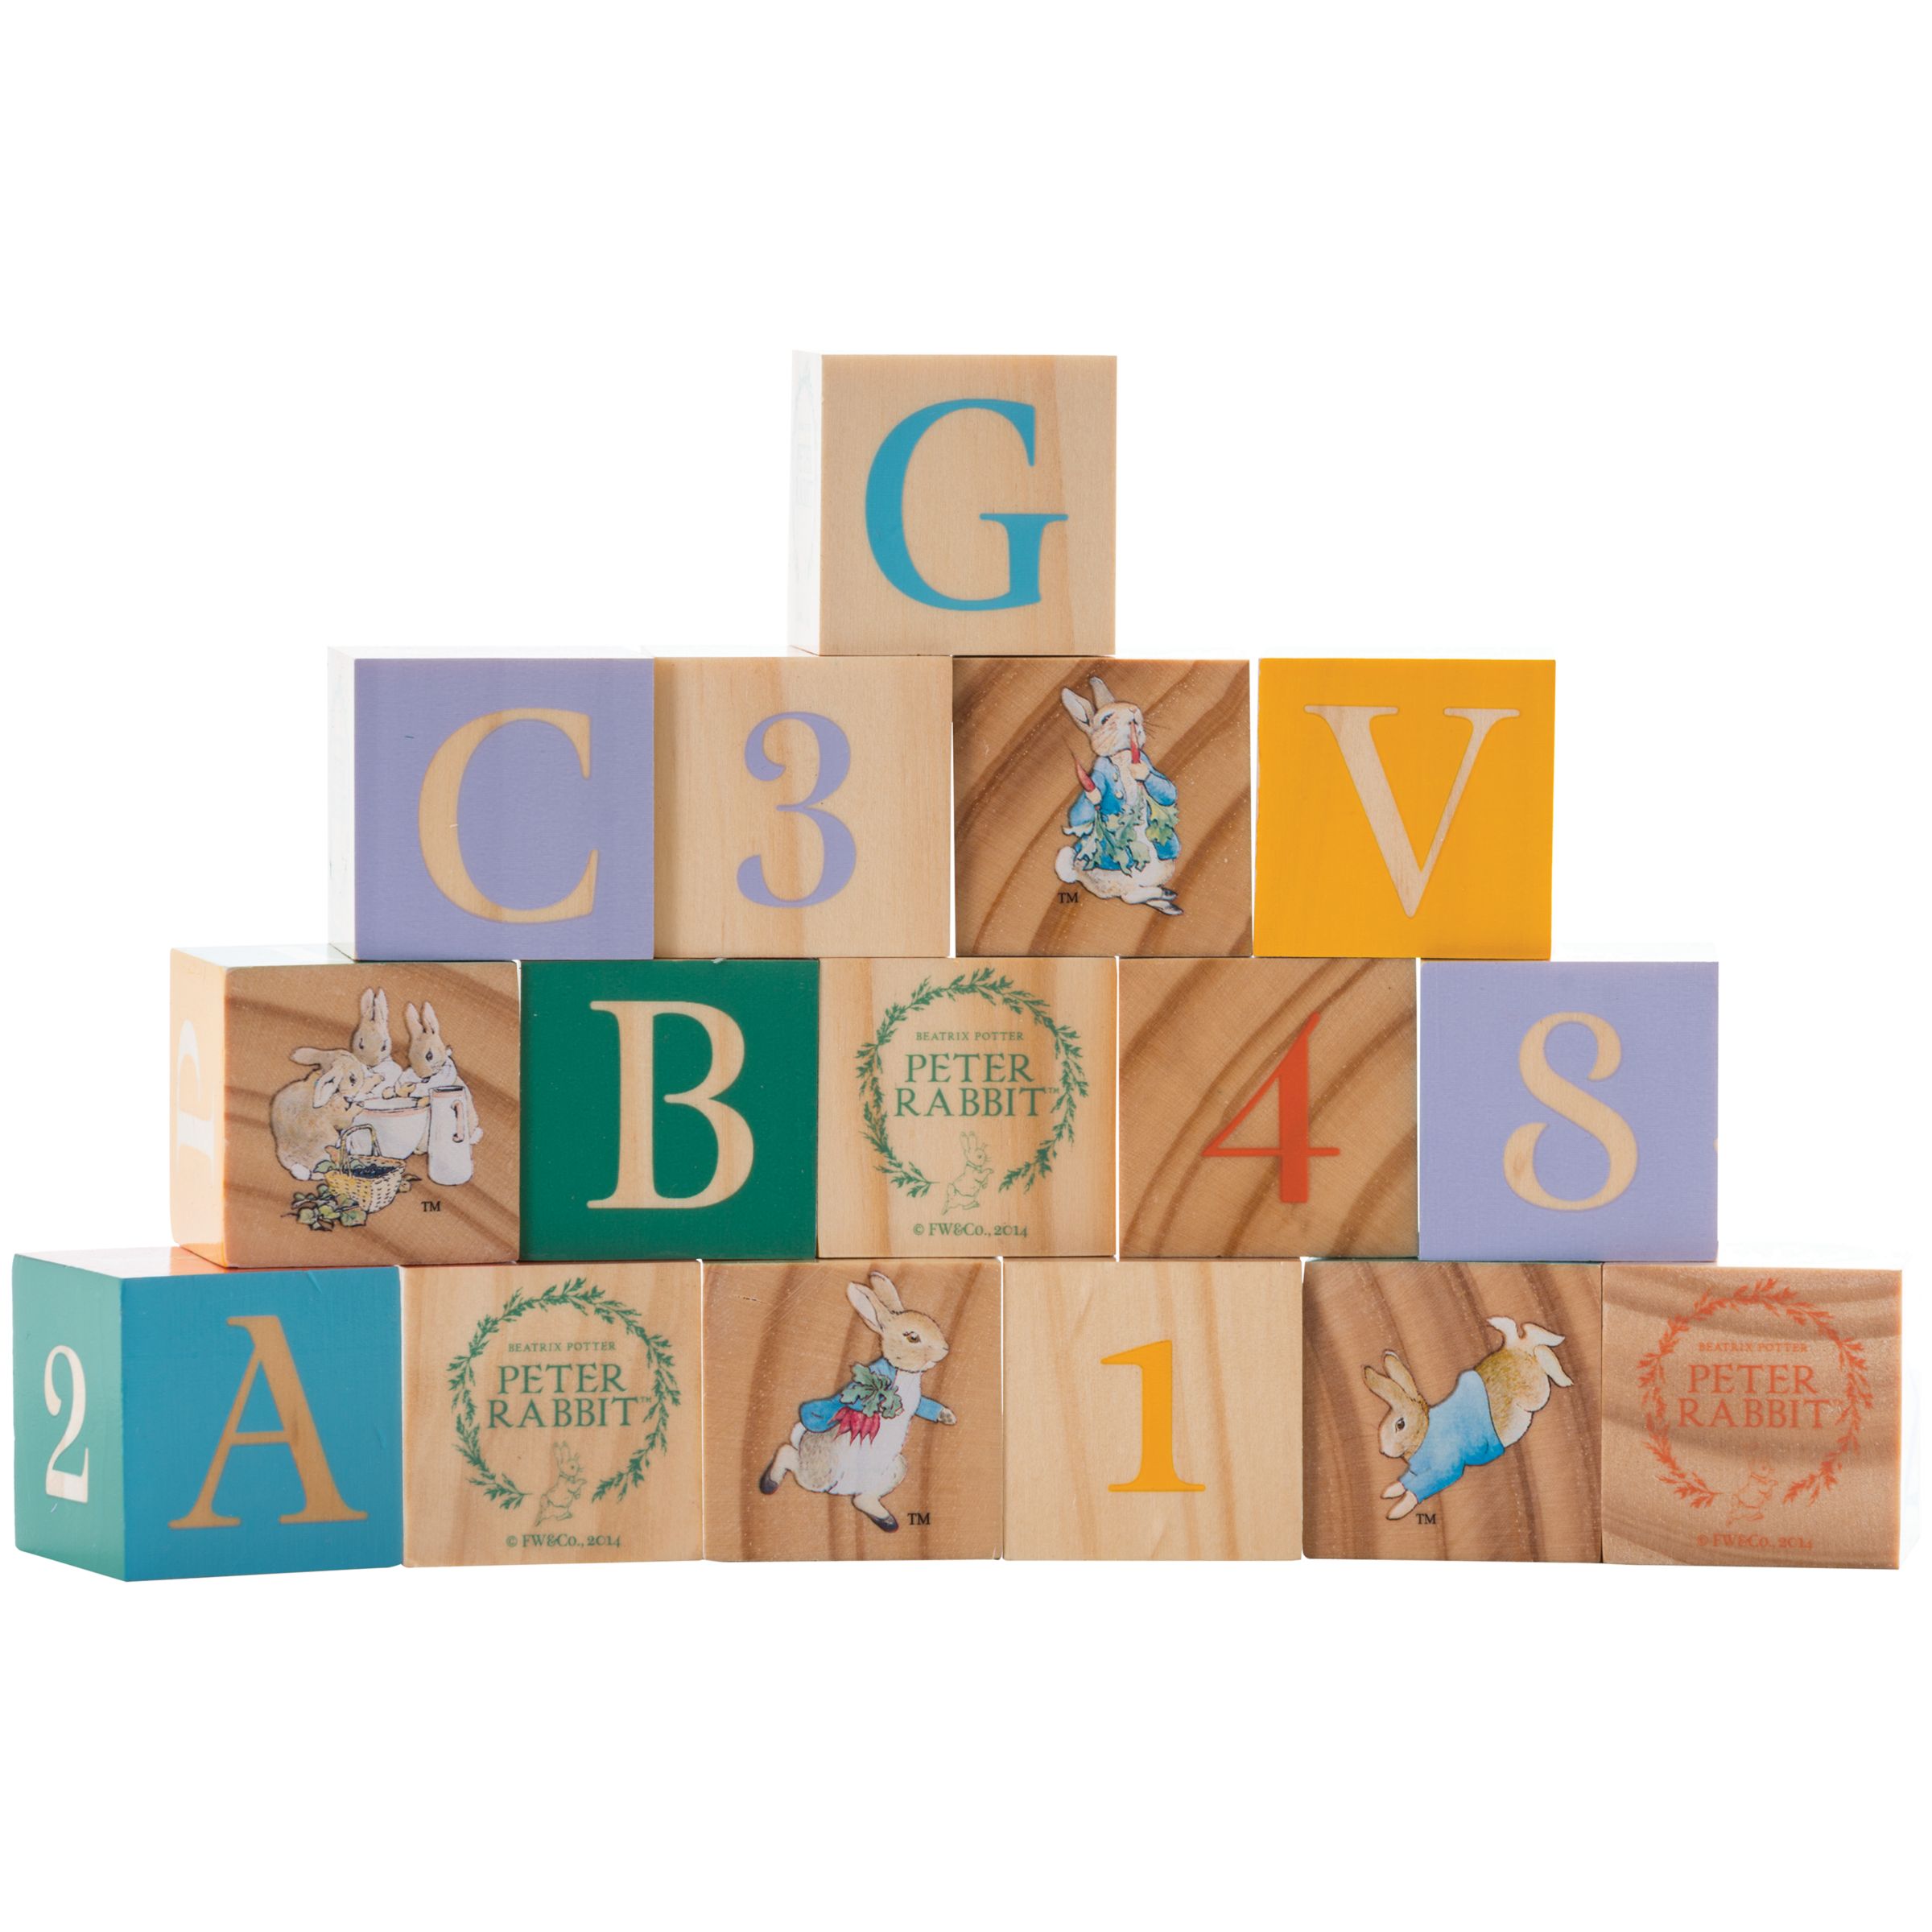 Peter Rabbit ABC Wooden Blocks Alphabet and Number Blocks Educational Toy